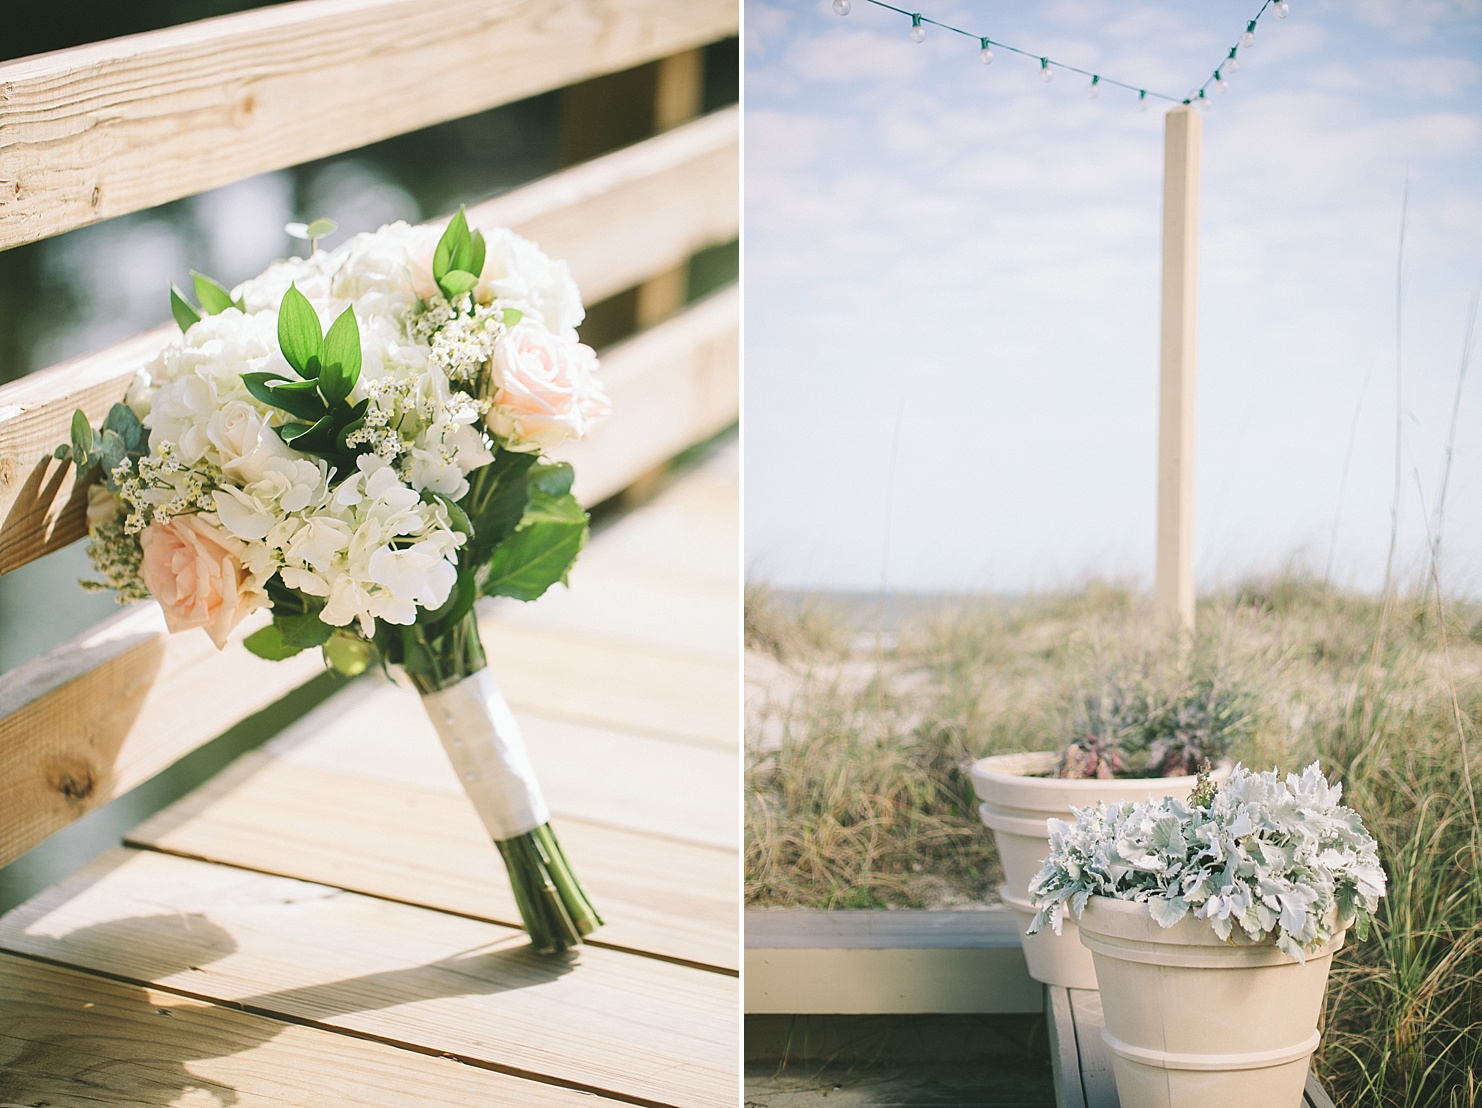 Wedding flowers in beach setting